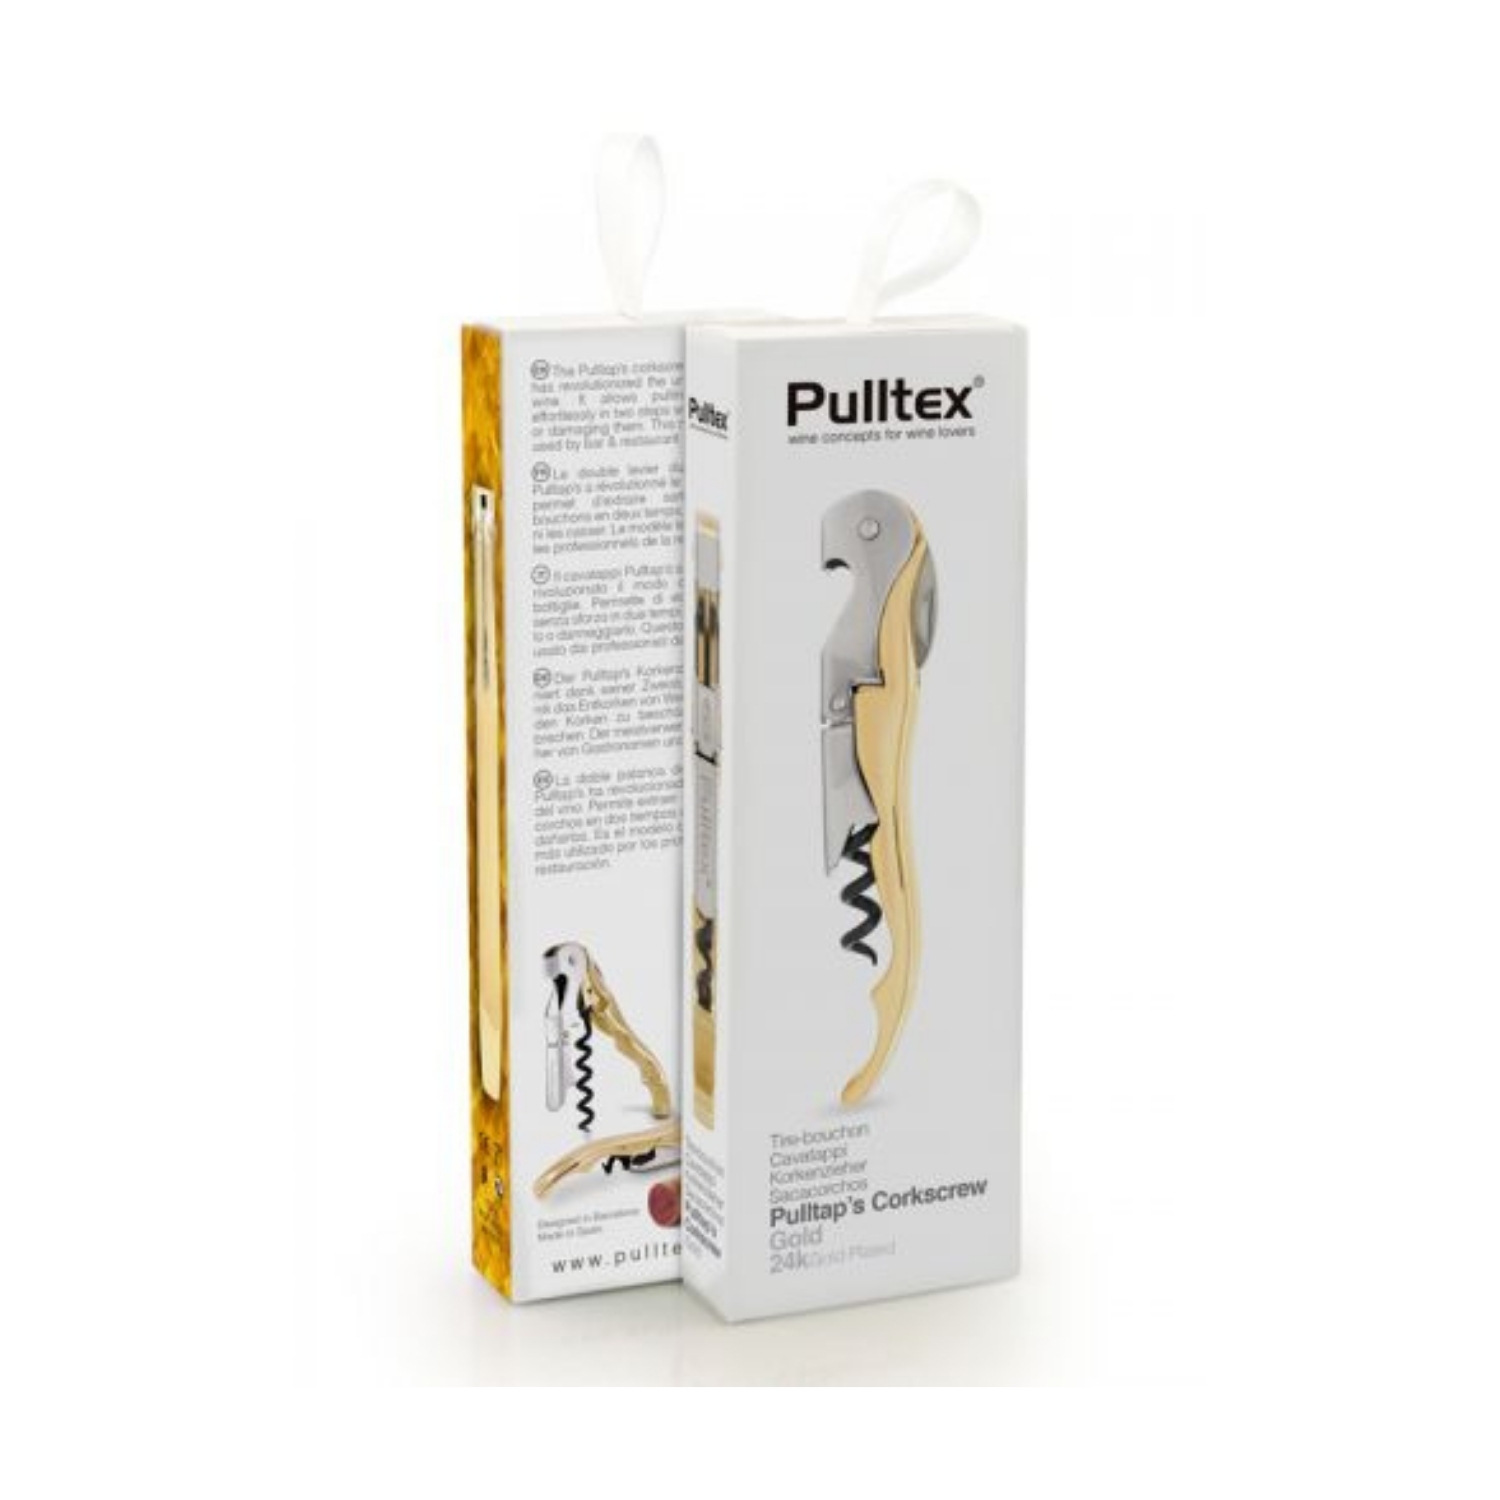 Pulltex Odpirač Pulltap´s Gold v embalaži